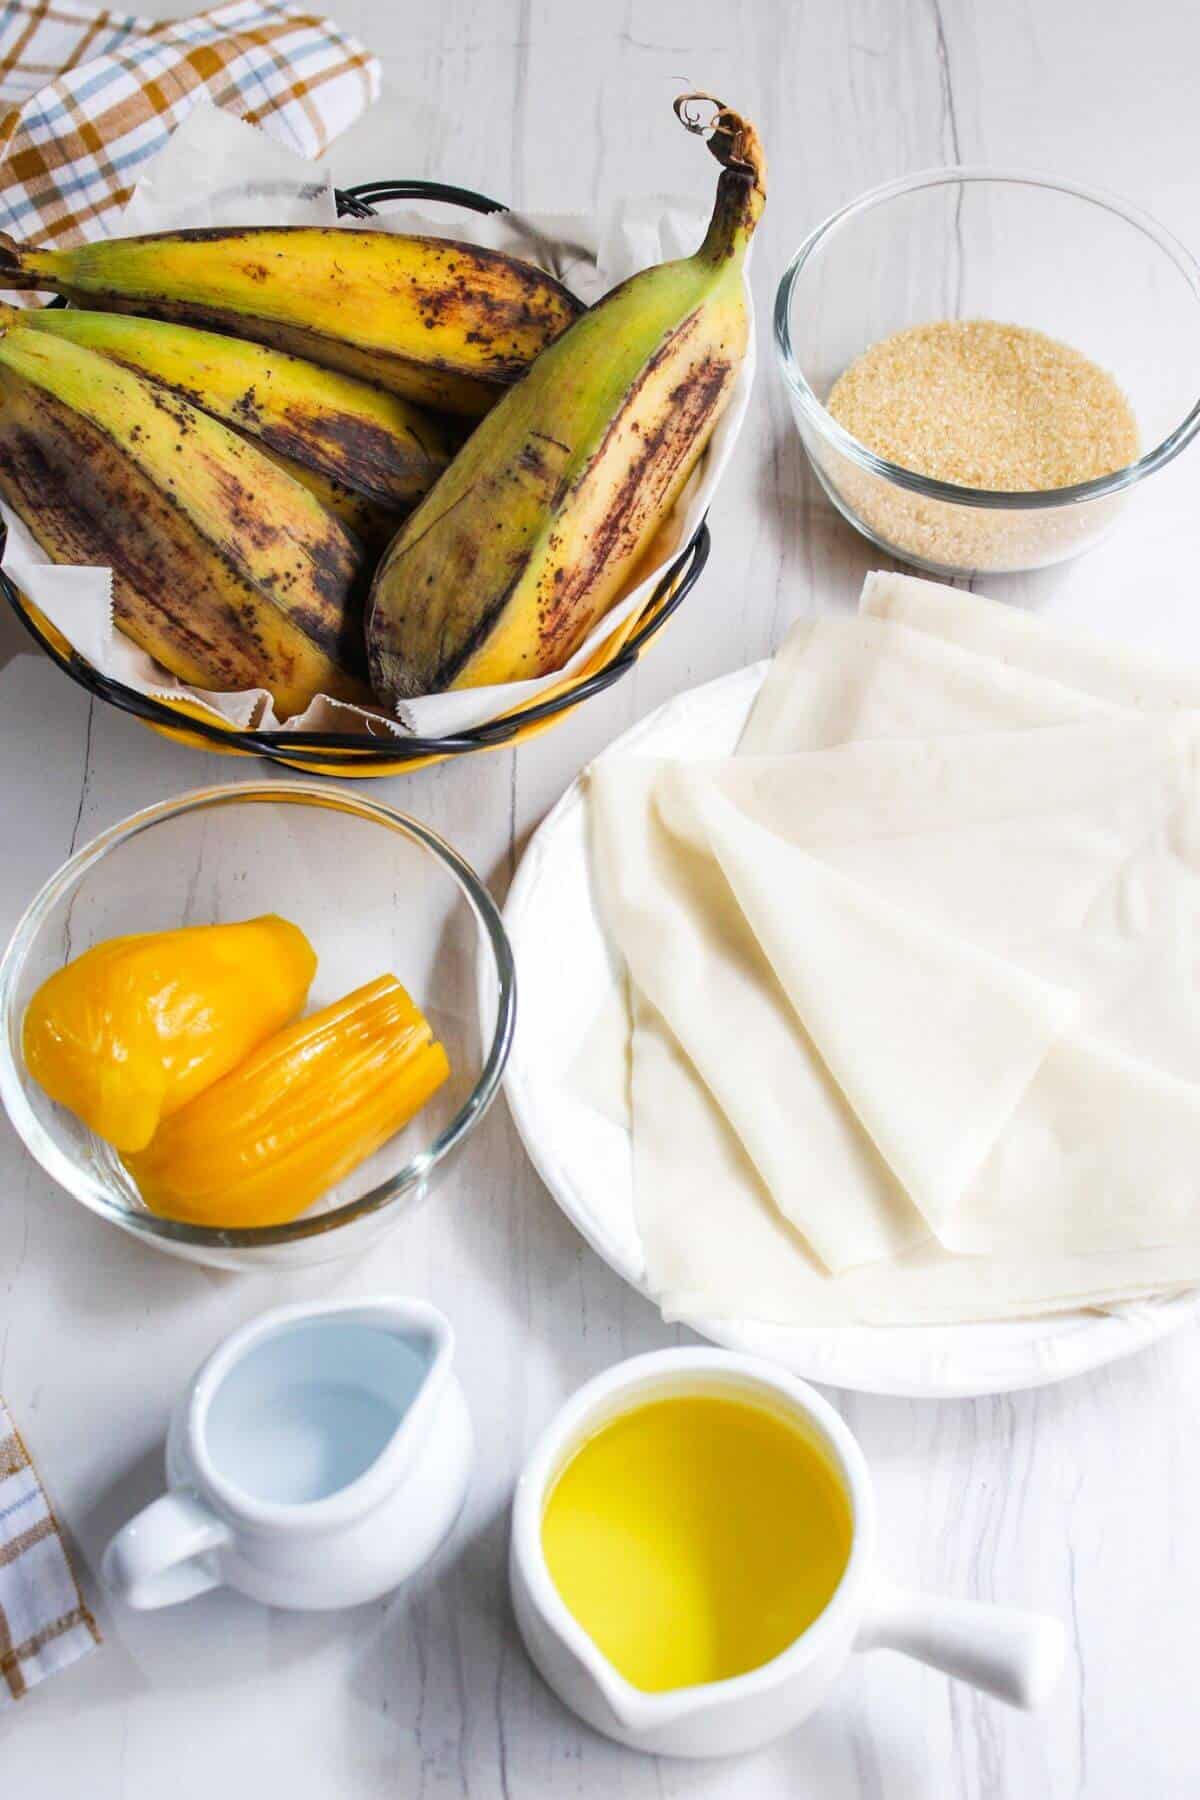 Ingredients for banana turon lumpia Filipino.